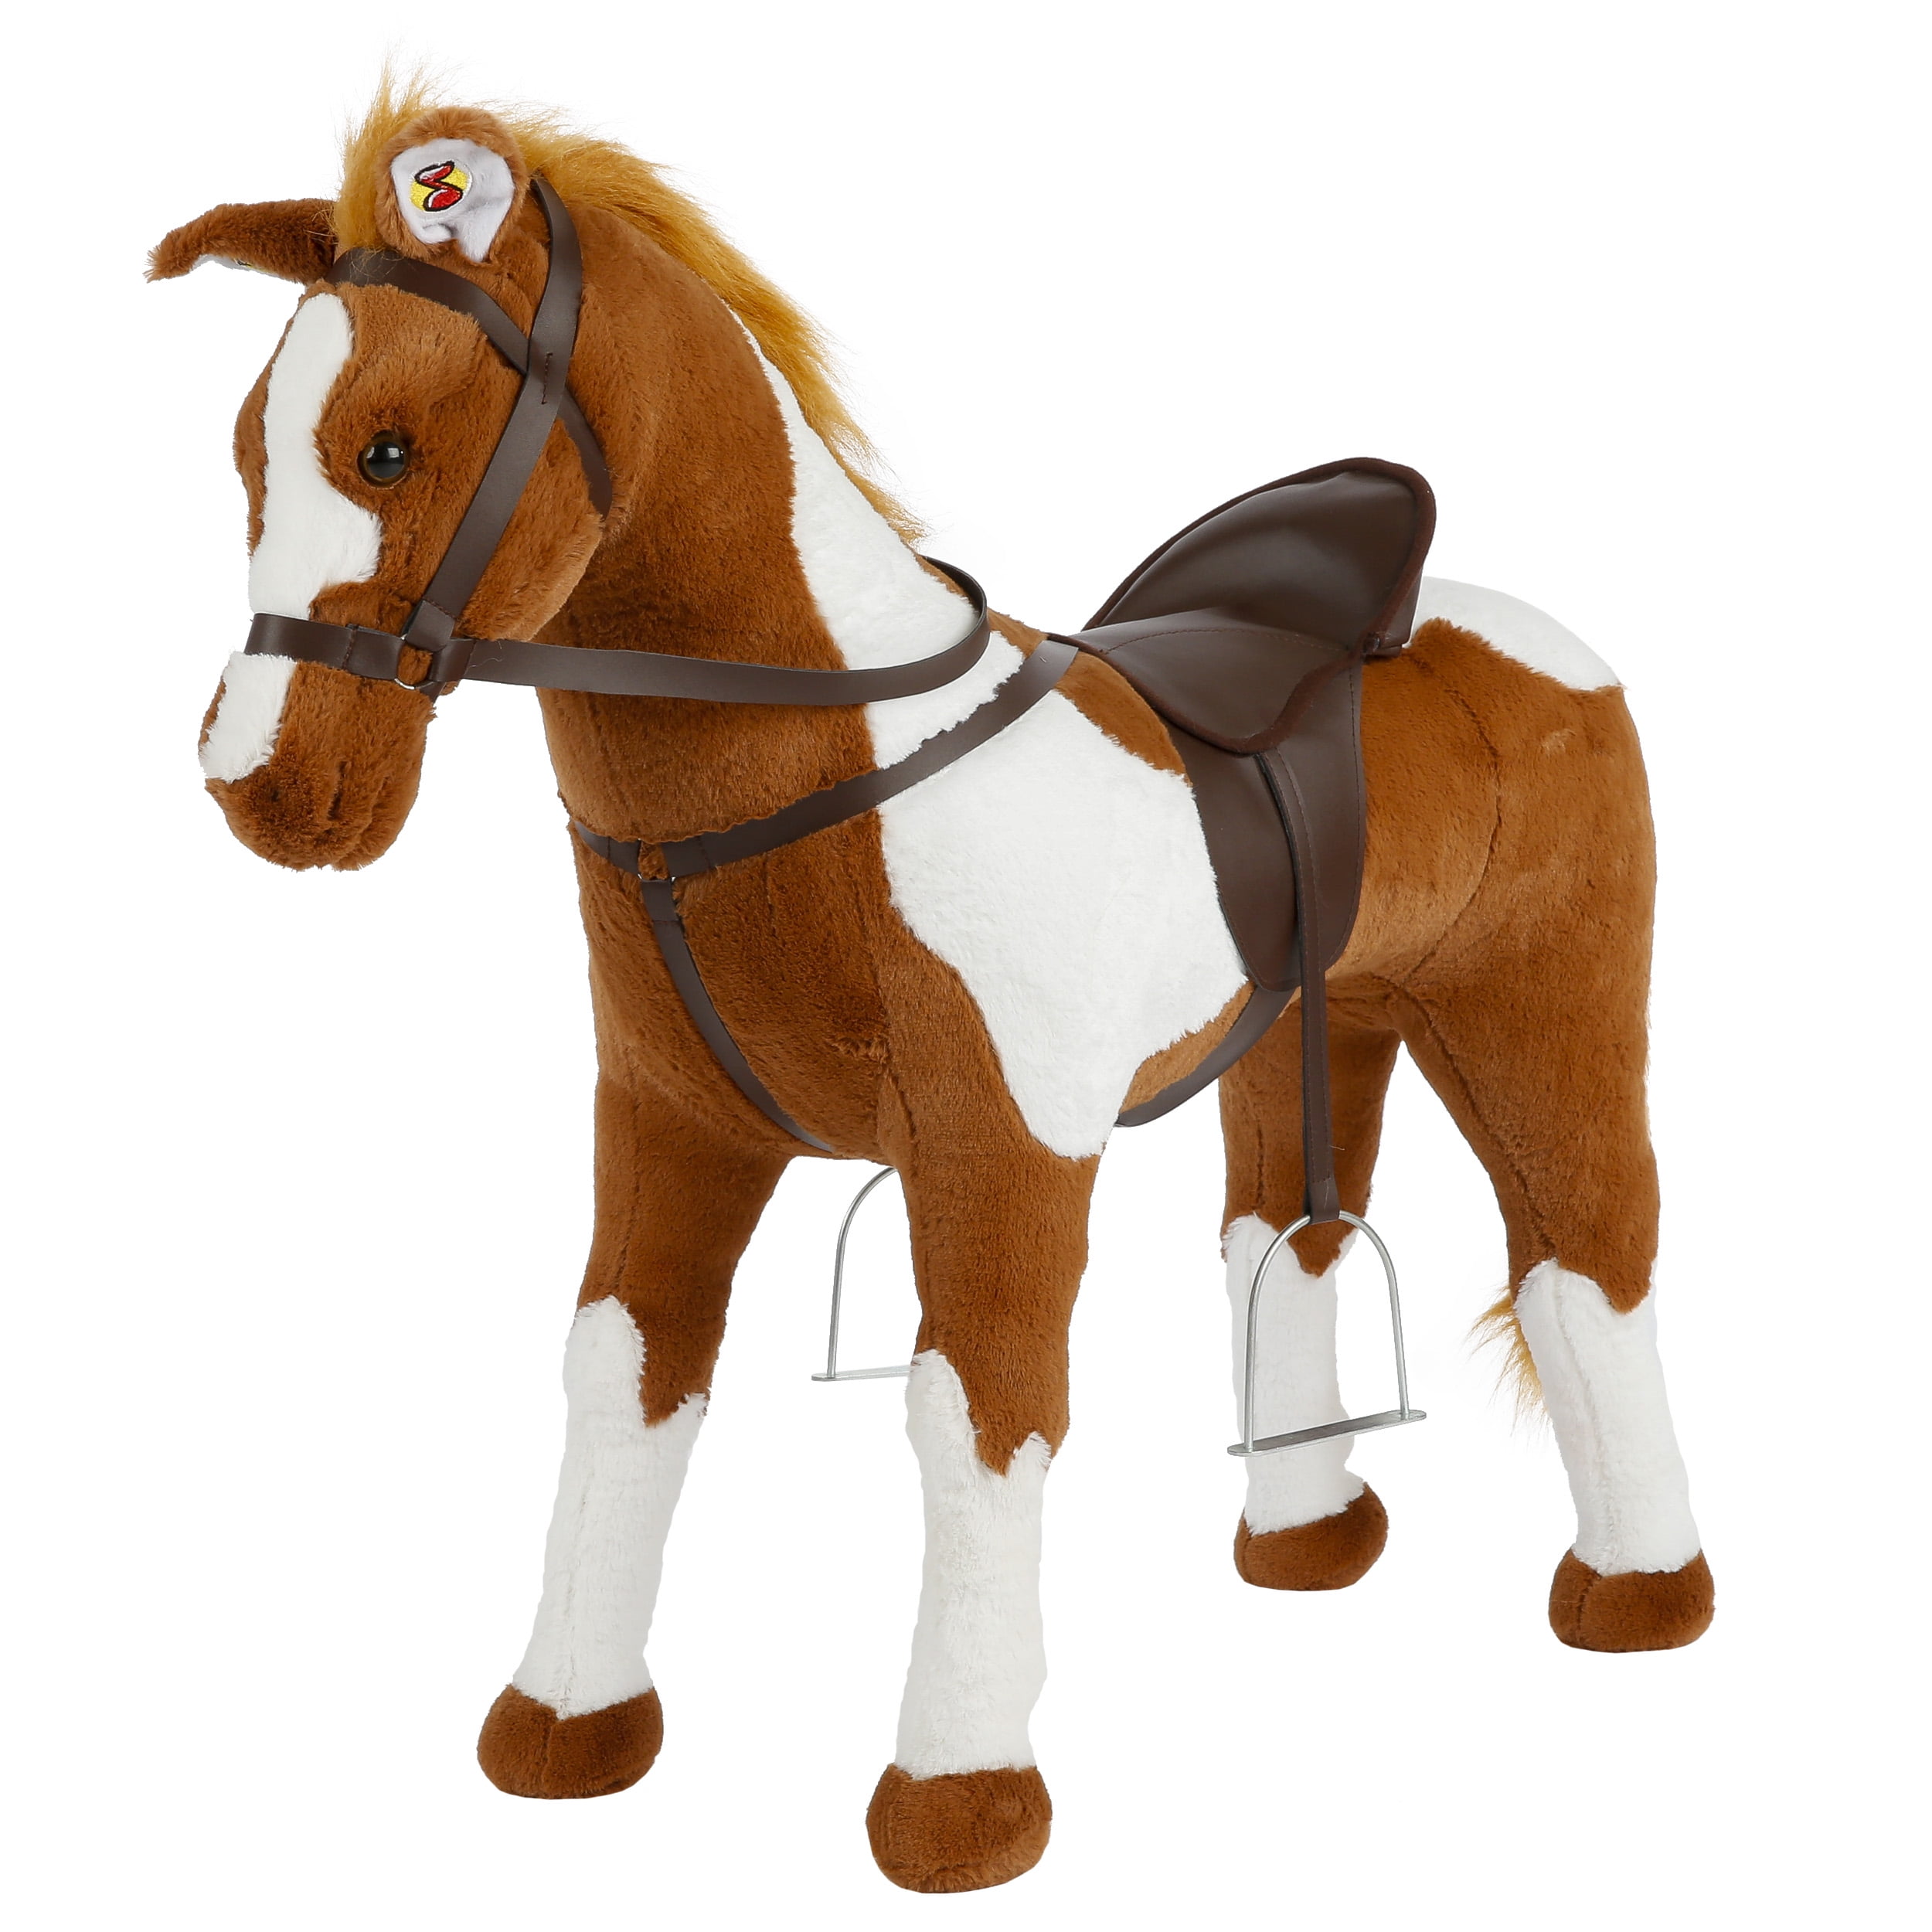 pony rider gallop and go walmart